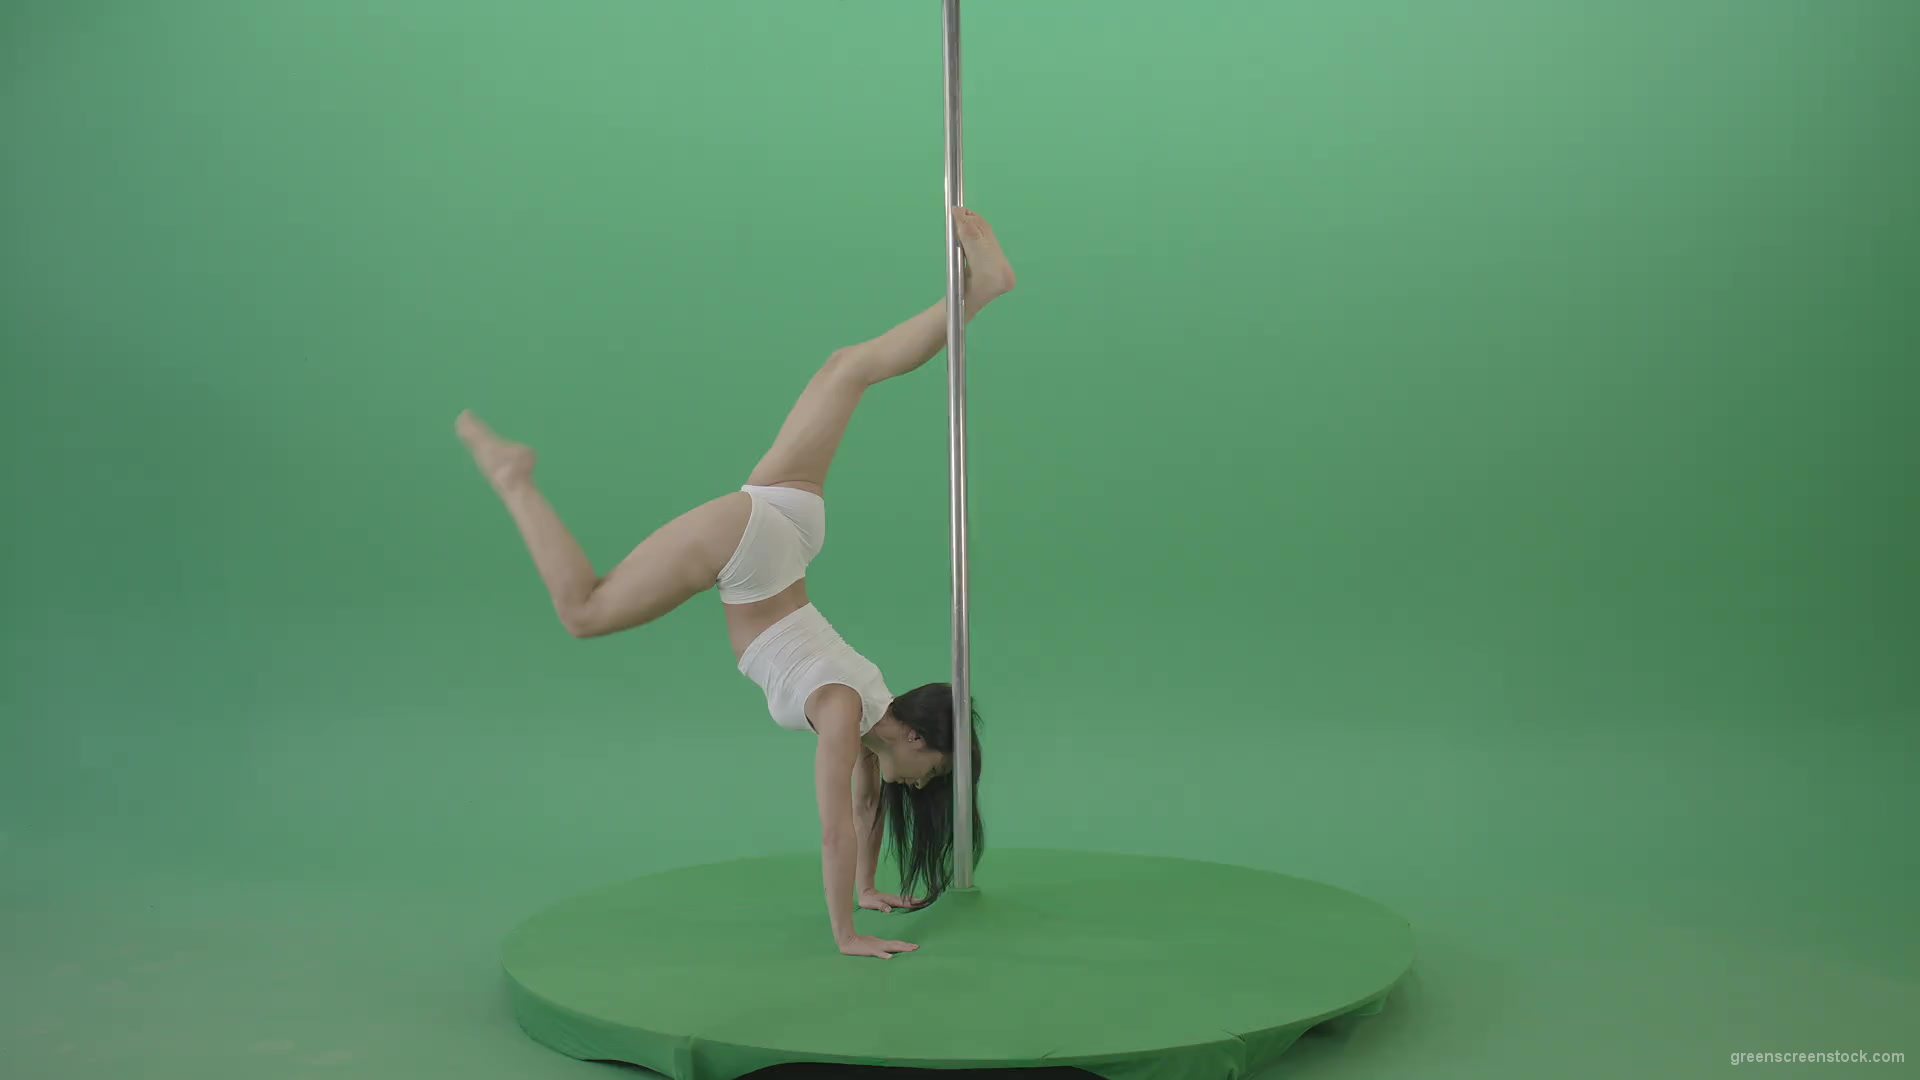 Fit-Girl-waving-legs-dancing-pole-dance-on-green-screen-4K-Video-Footage-1920_001 Green Screen Stock